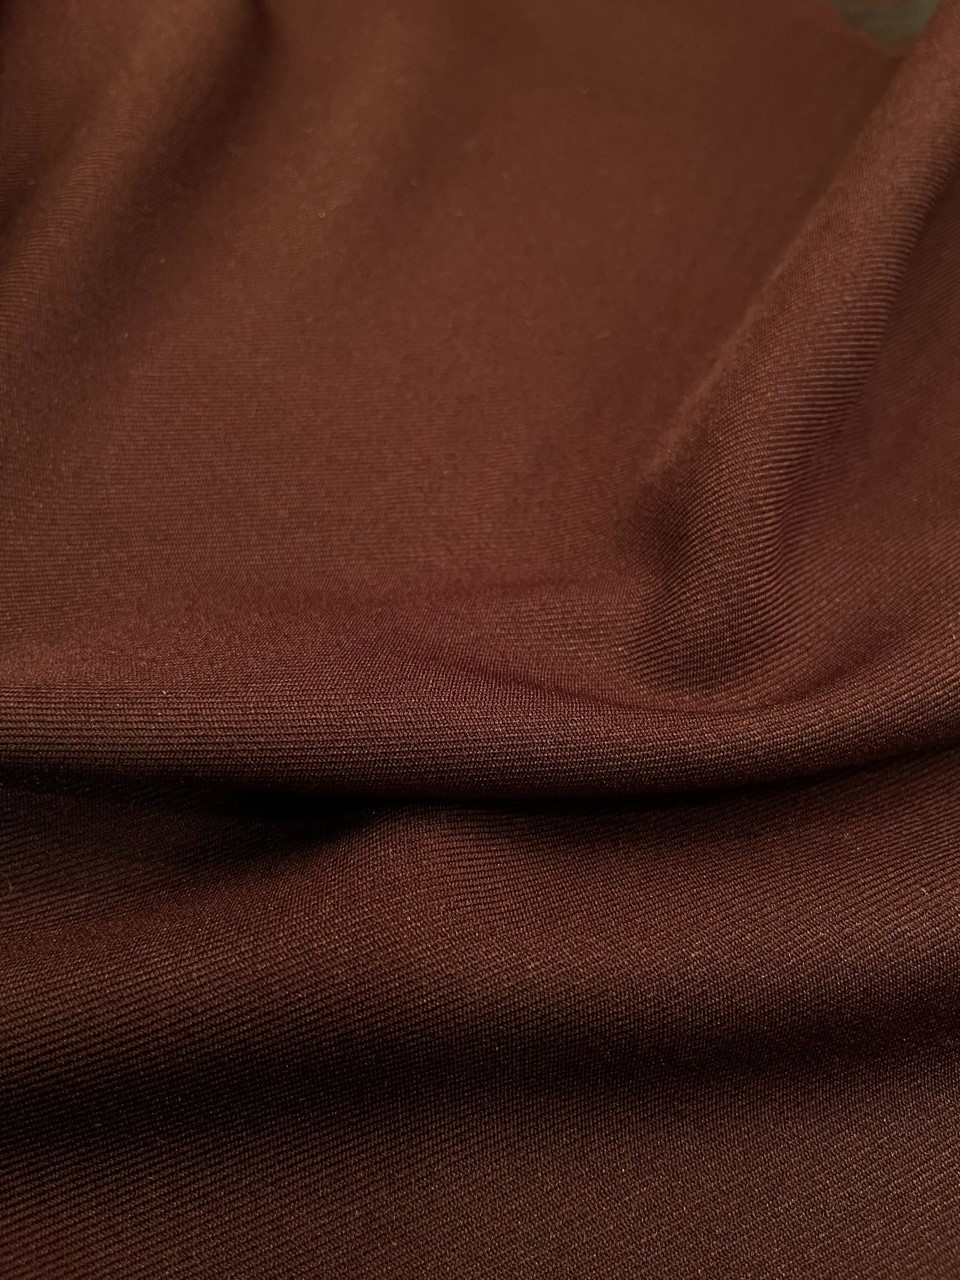 59/60" Brown Gabardine Fabric By The Yard